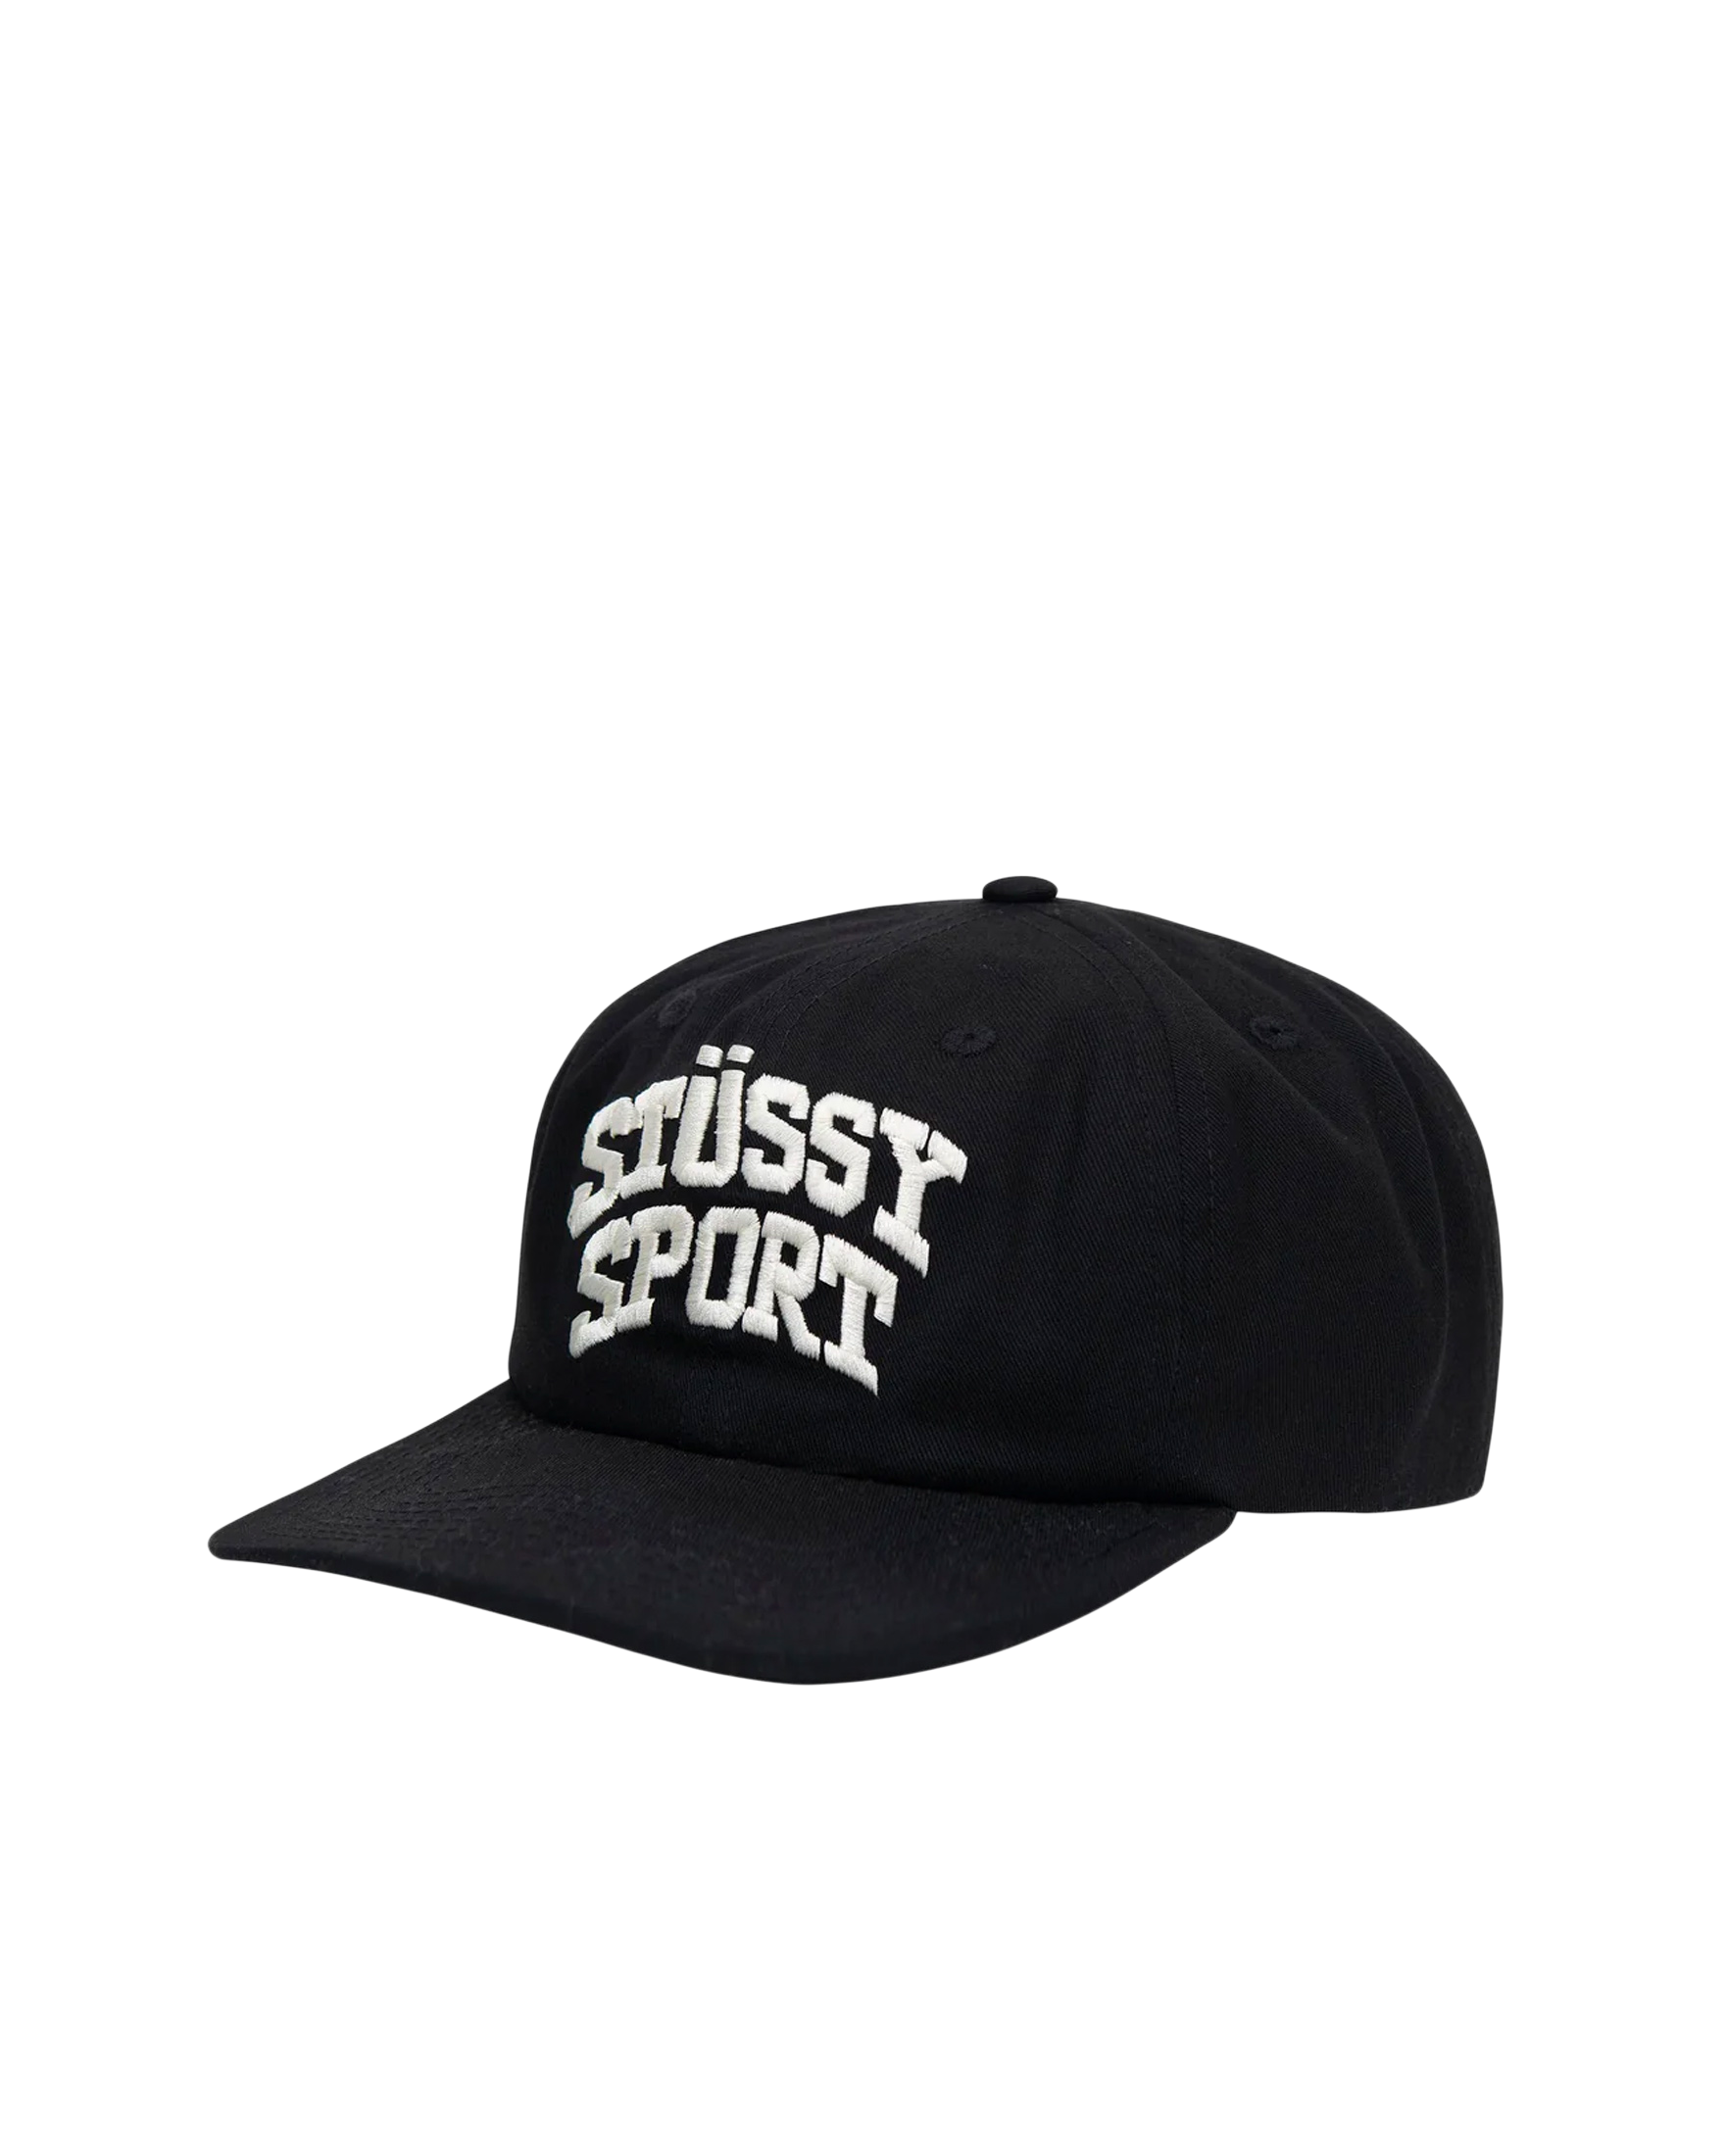 Stussy Sport Cap Stussy Headwear Caps Black